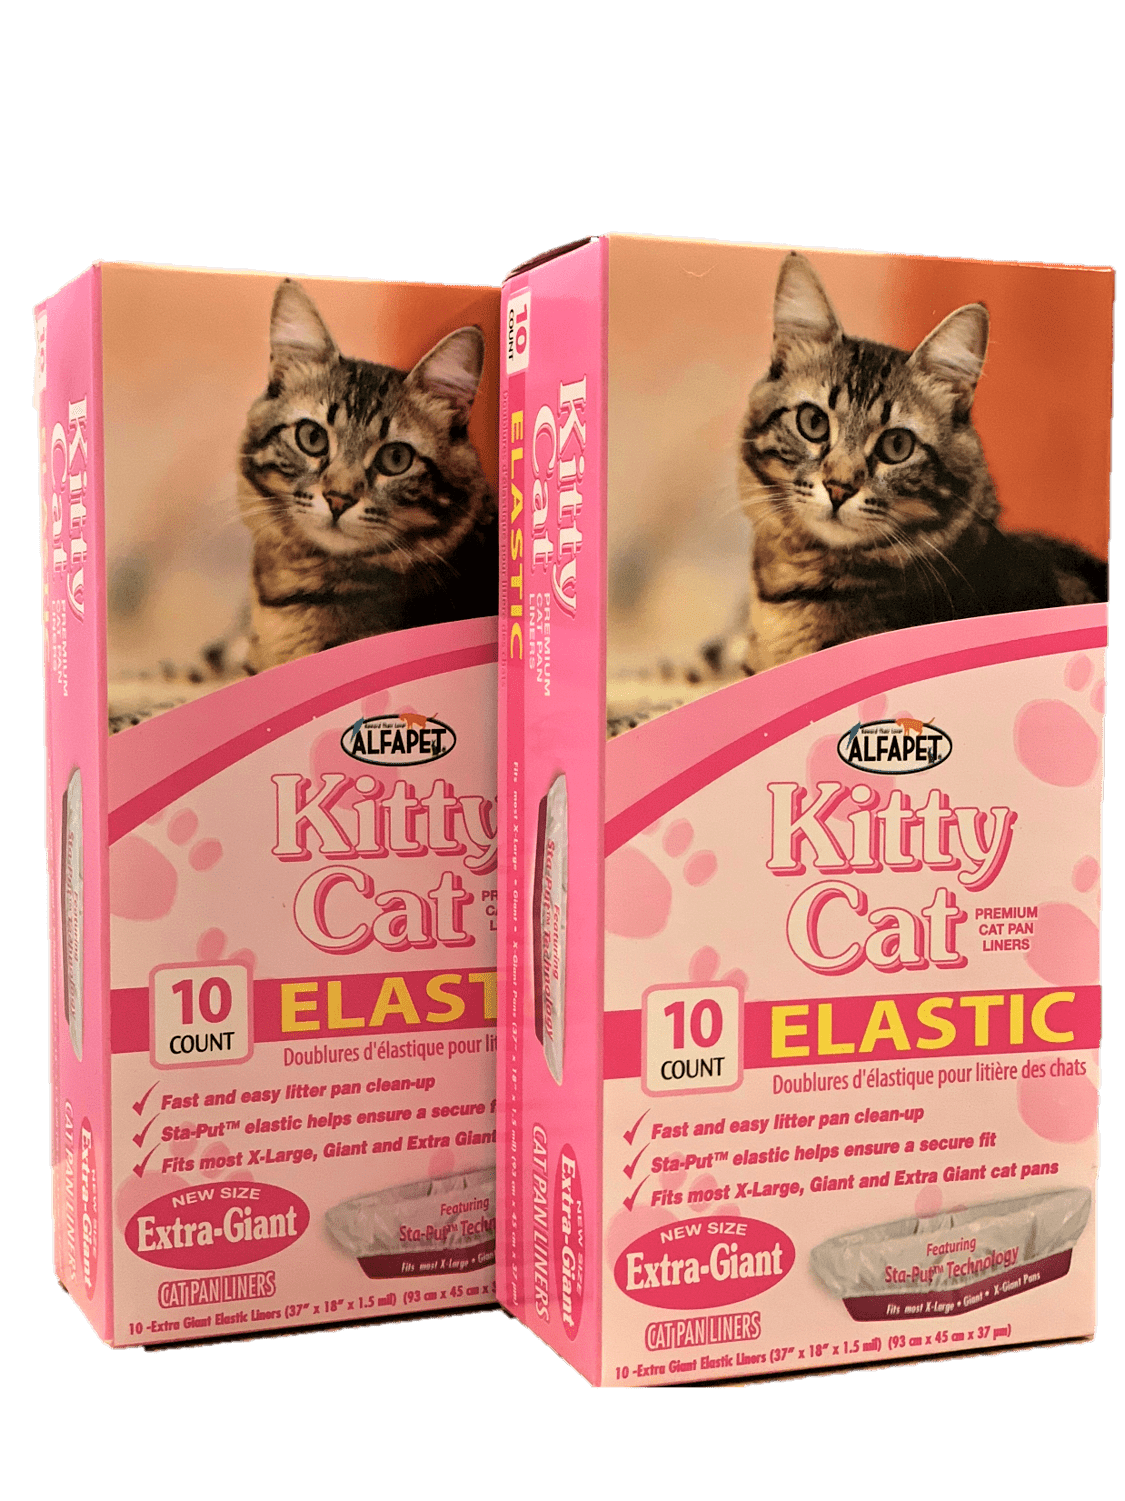 Alfapet, Kitty Cat Elastic Litter Box Liners, 10 Count